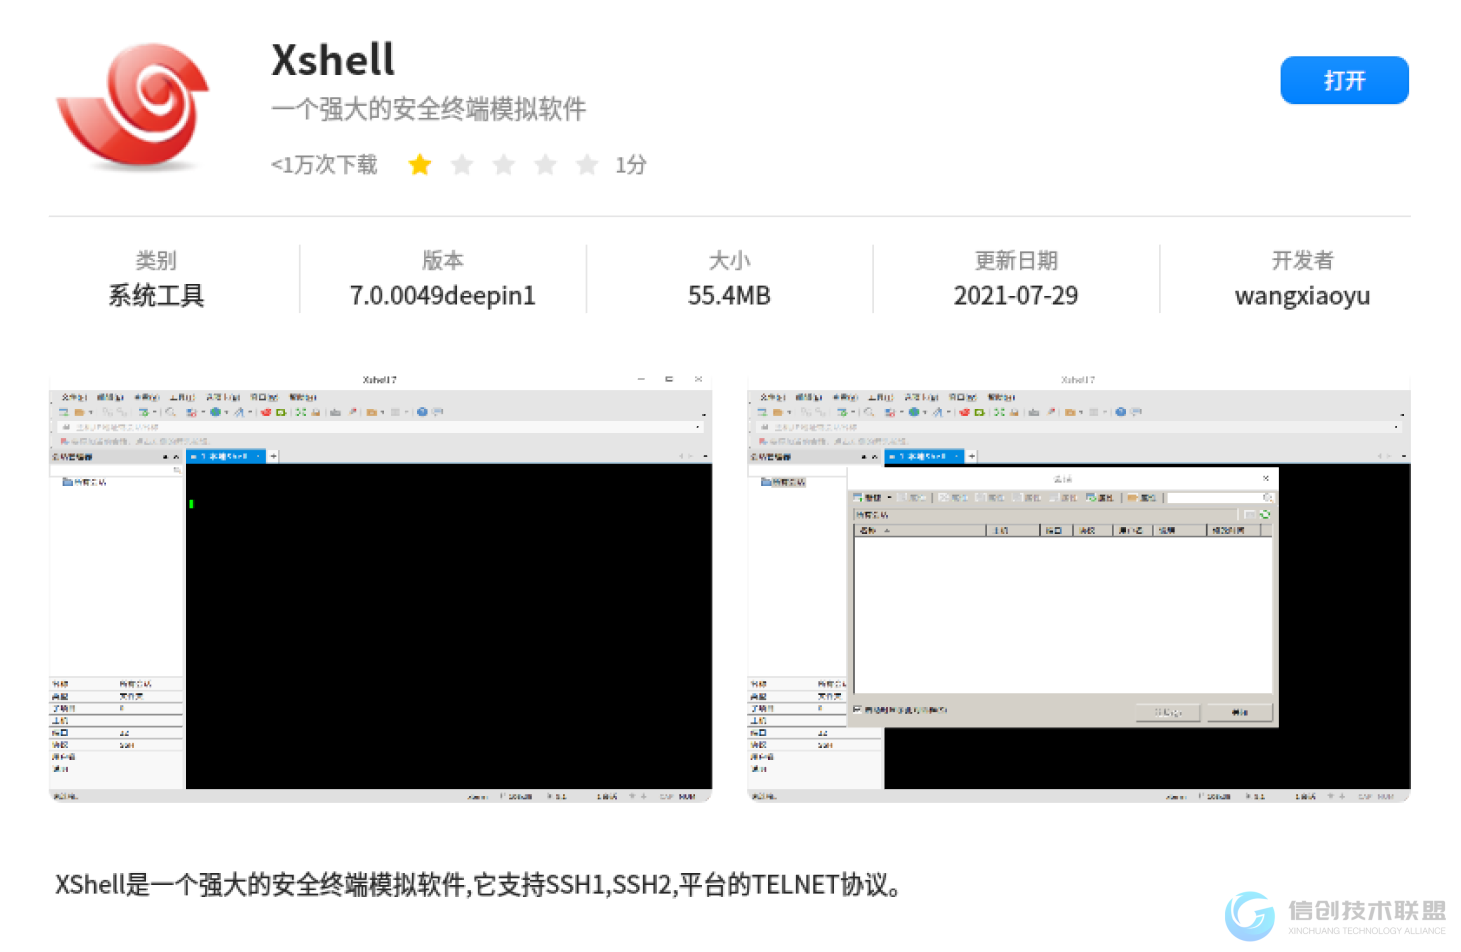 UOS家庭版安装xshell后无法使用，显示：“您的Xshell“评估期已过